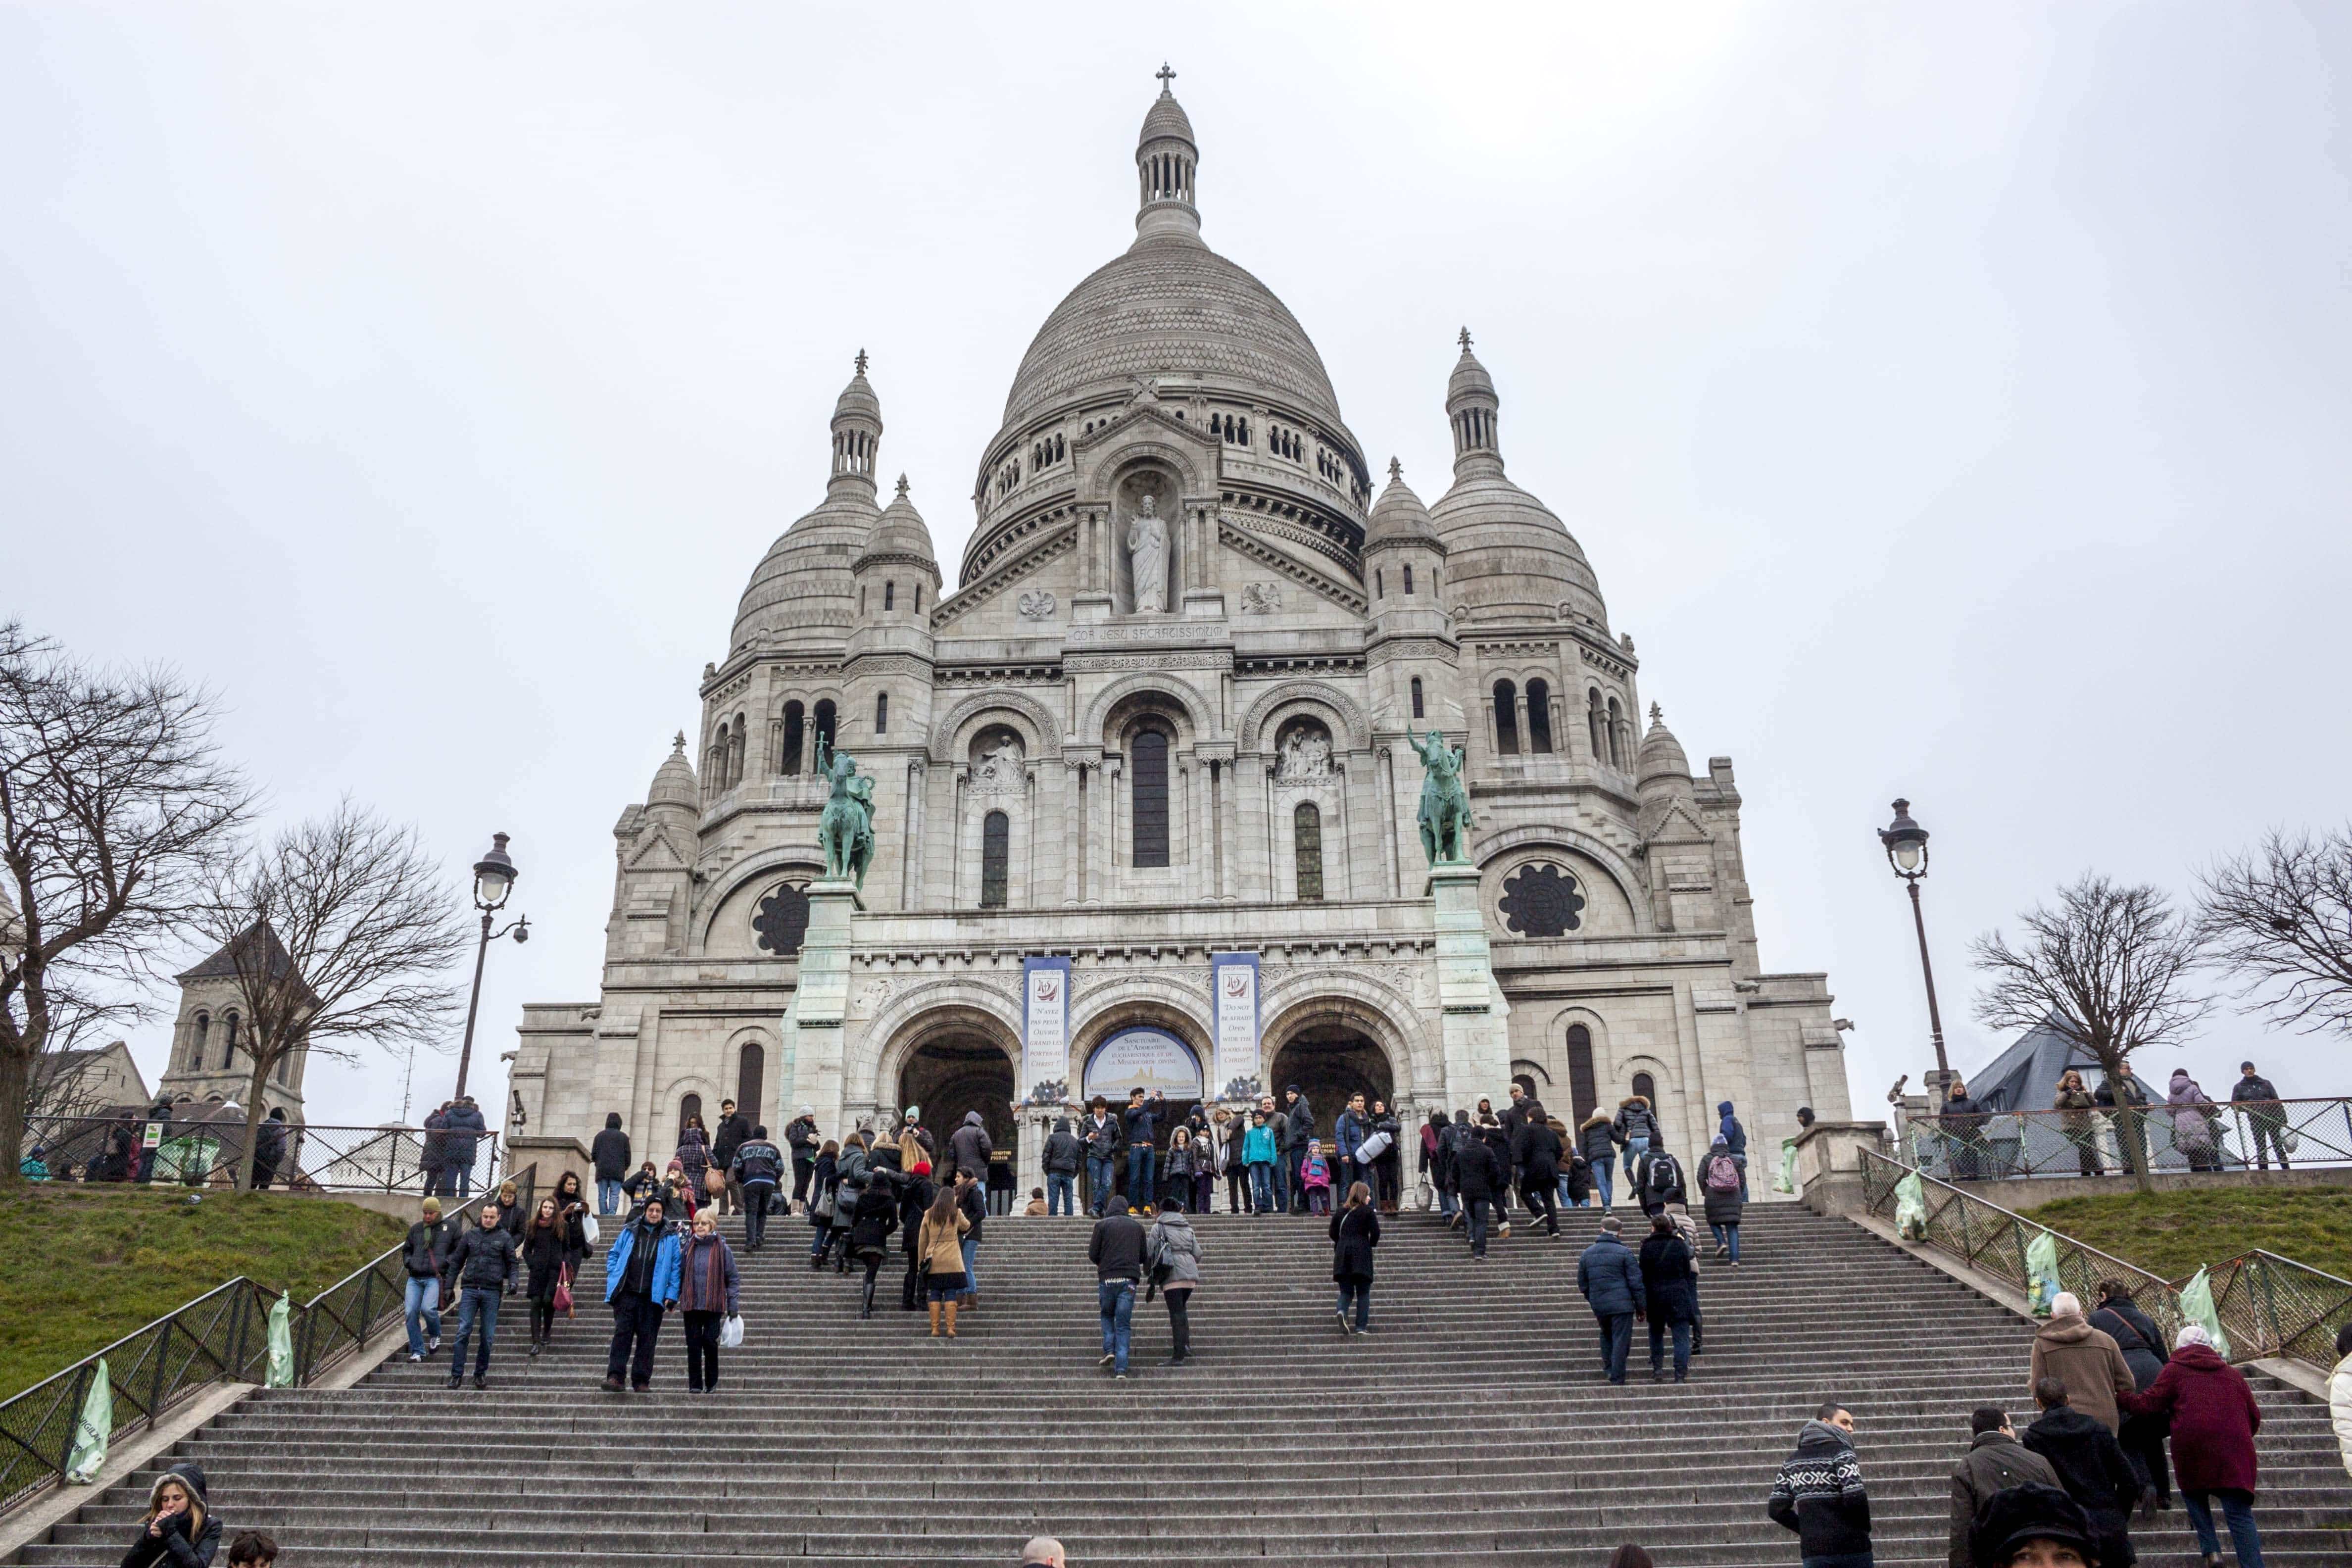 Le Sacre Coeur or Sacred Heart in Montmartre Paris